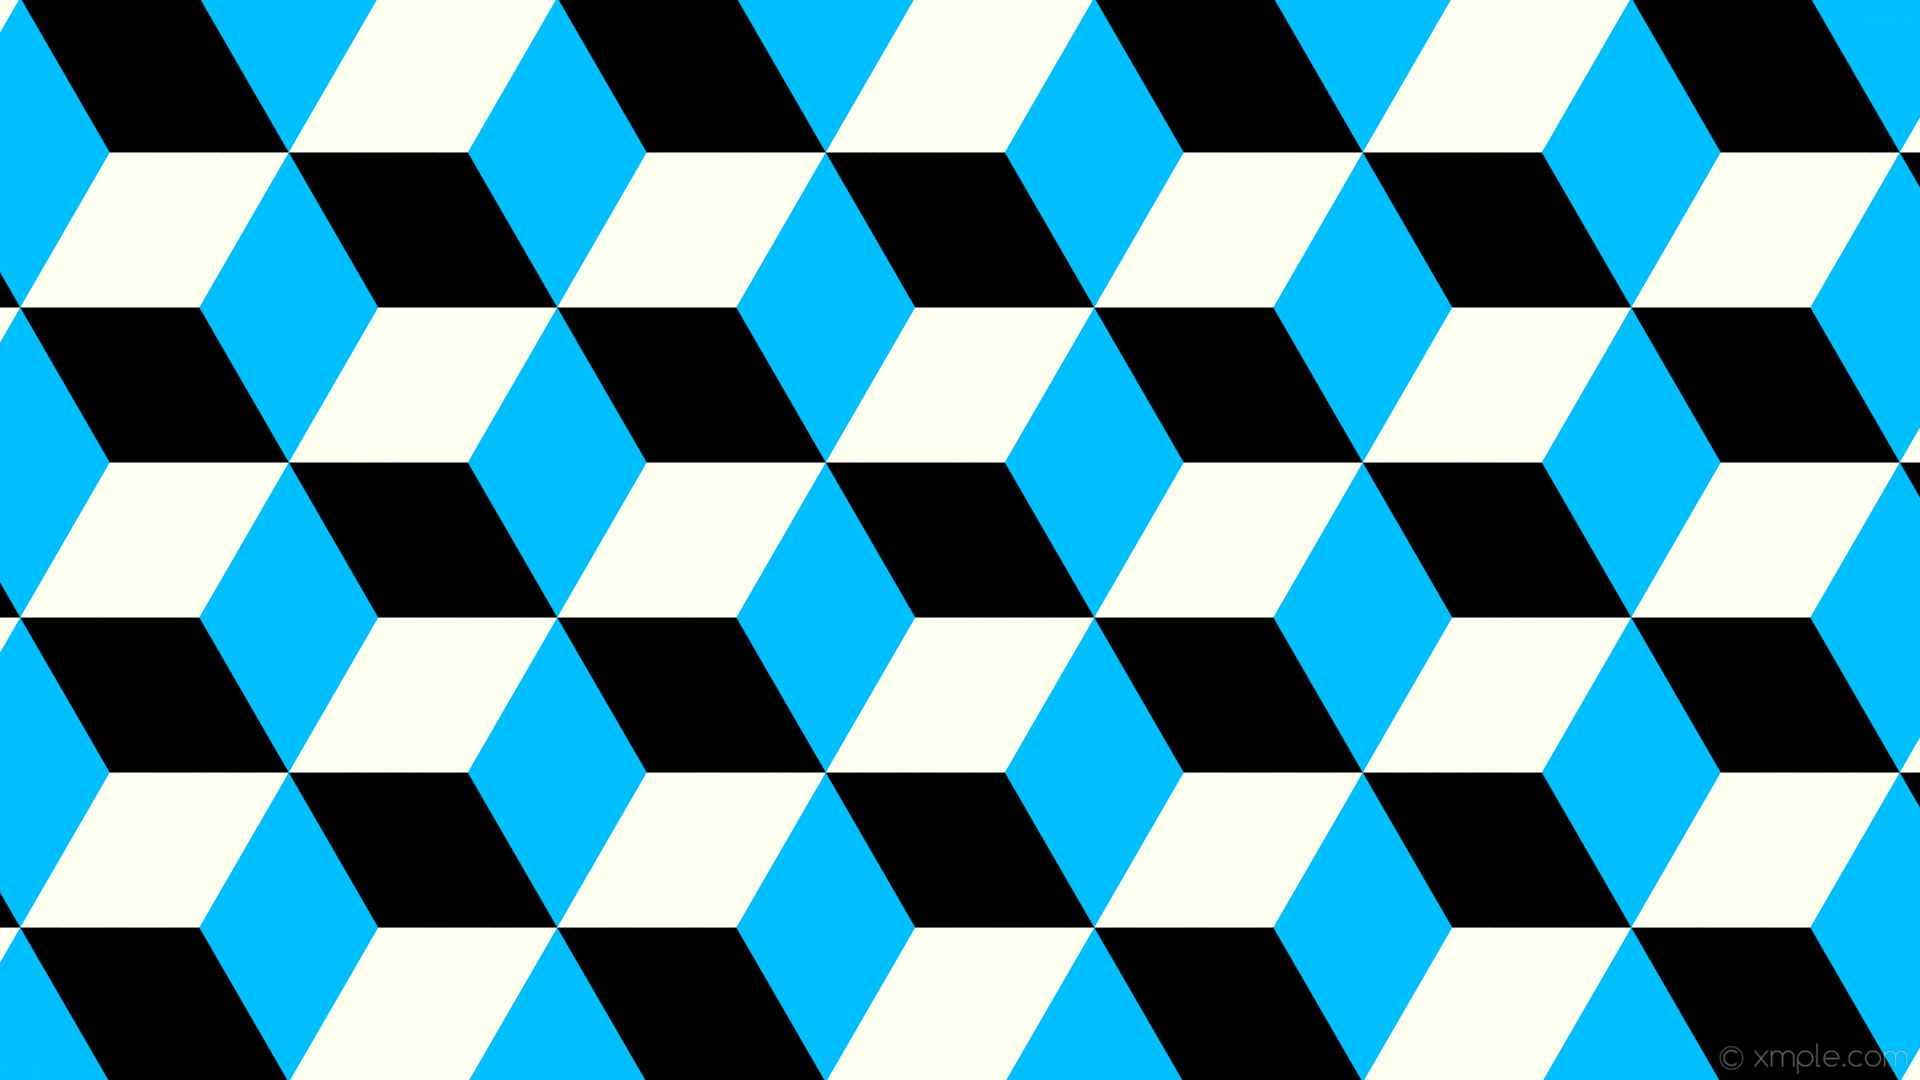 1920x1080 wallpaper white 3d cubes blue black deep sky blue ivory #000000 #00bfff  #fffff0